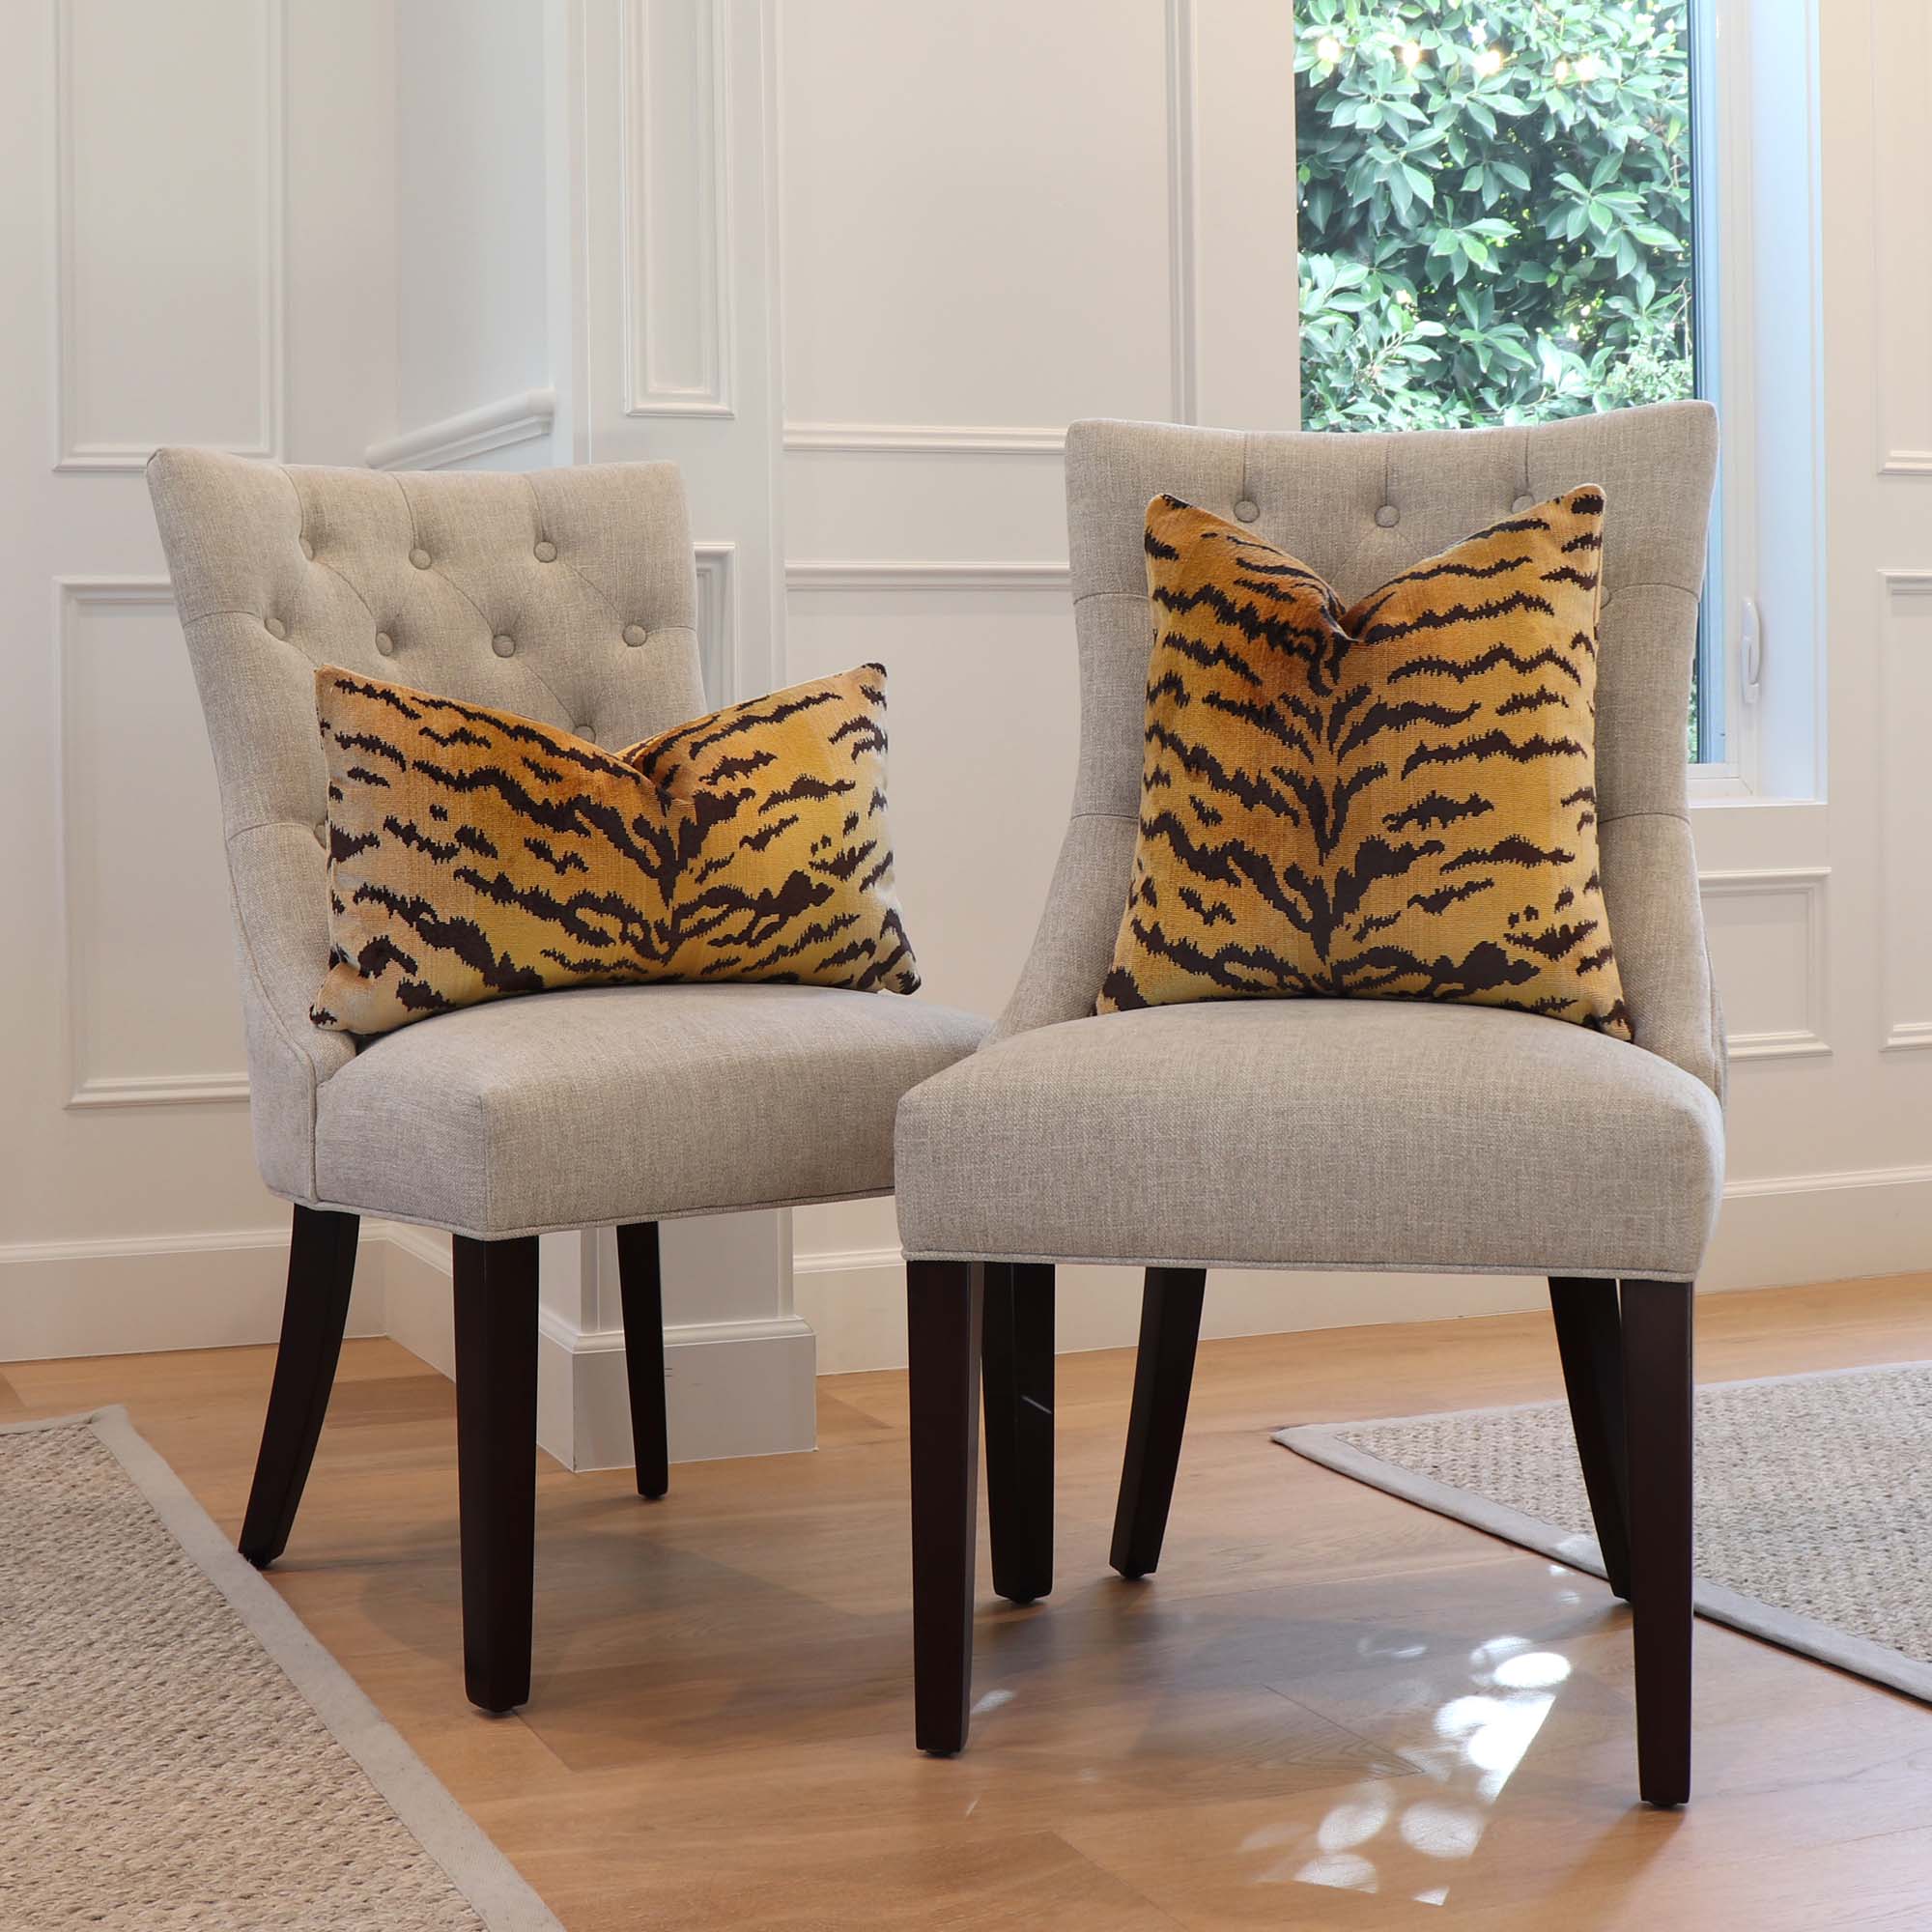 Scalamandre Tigre Silk Velvet Gold Animal Print Luxury Decorative Designer Throw Pillow Cover on Chairs in Home Decor